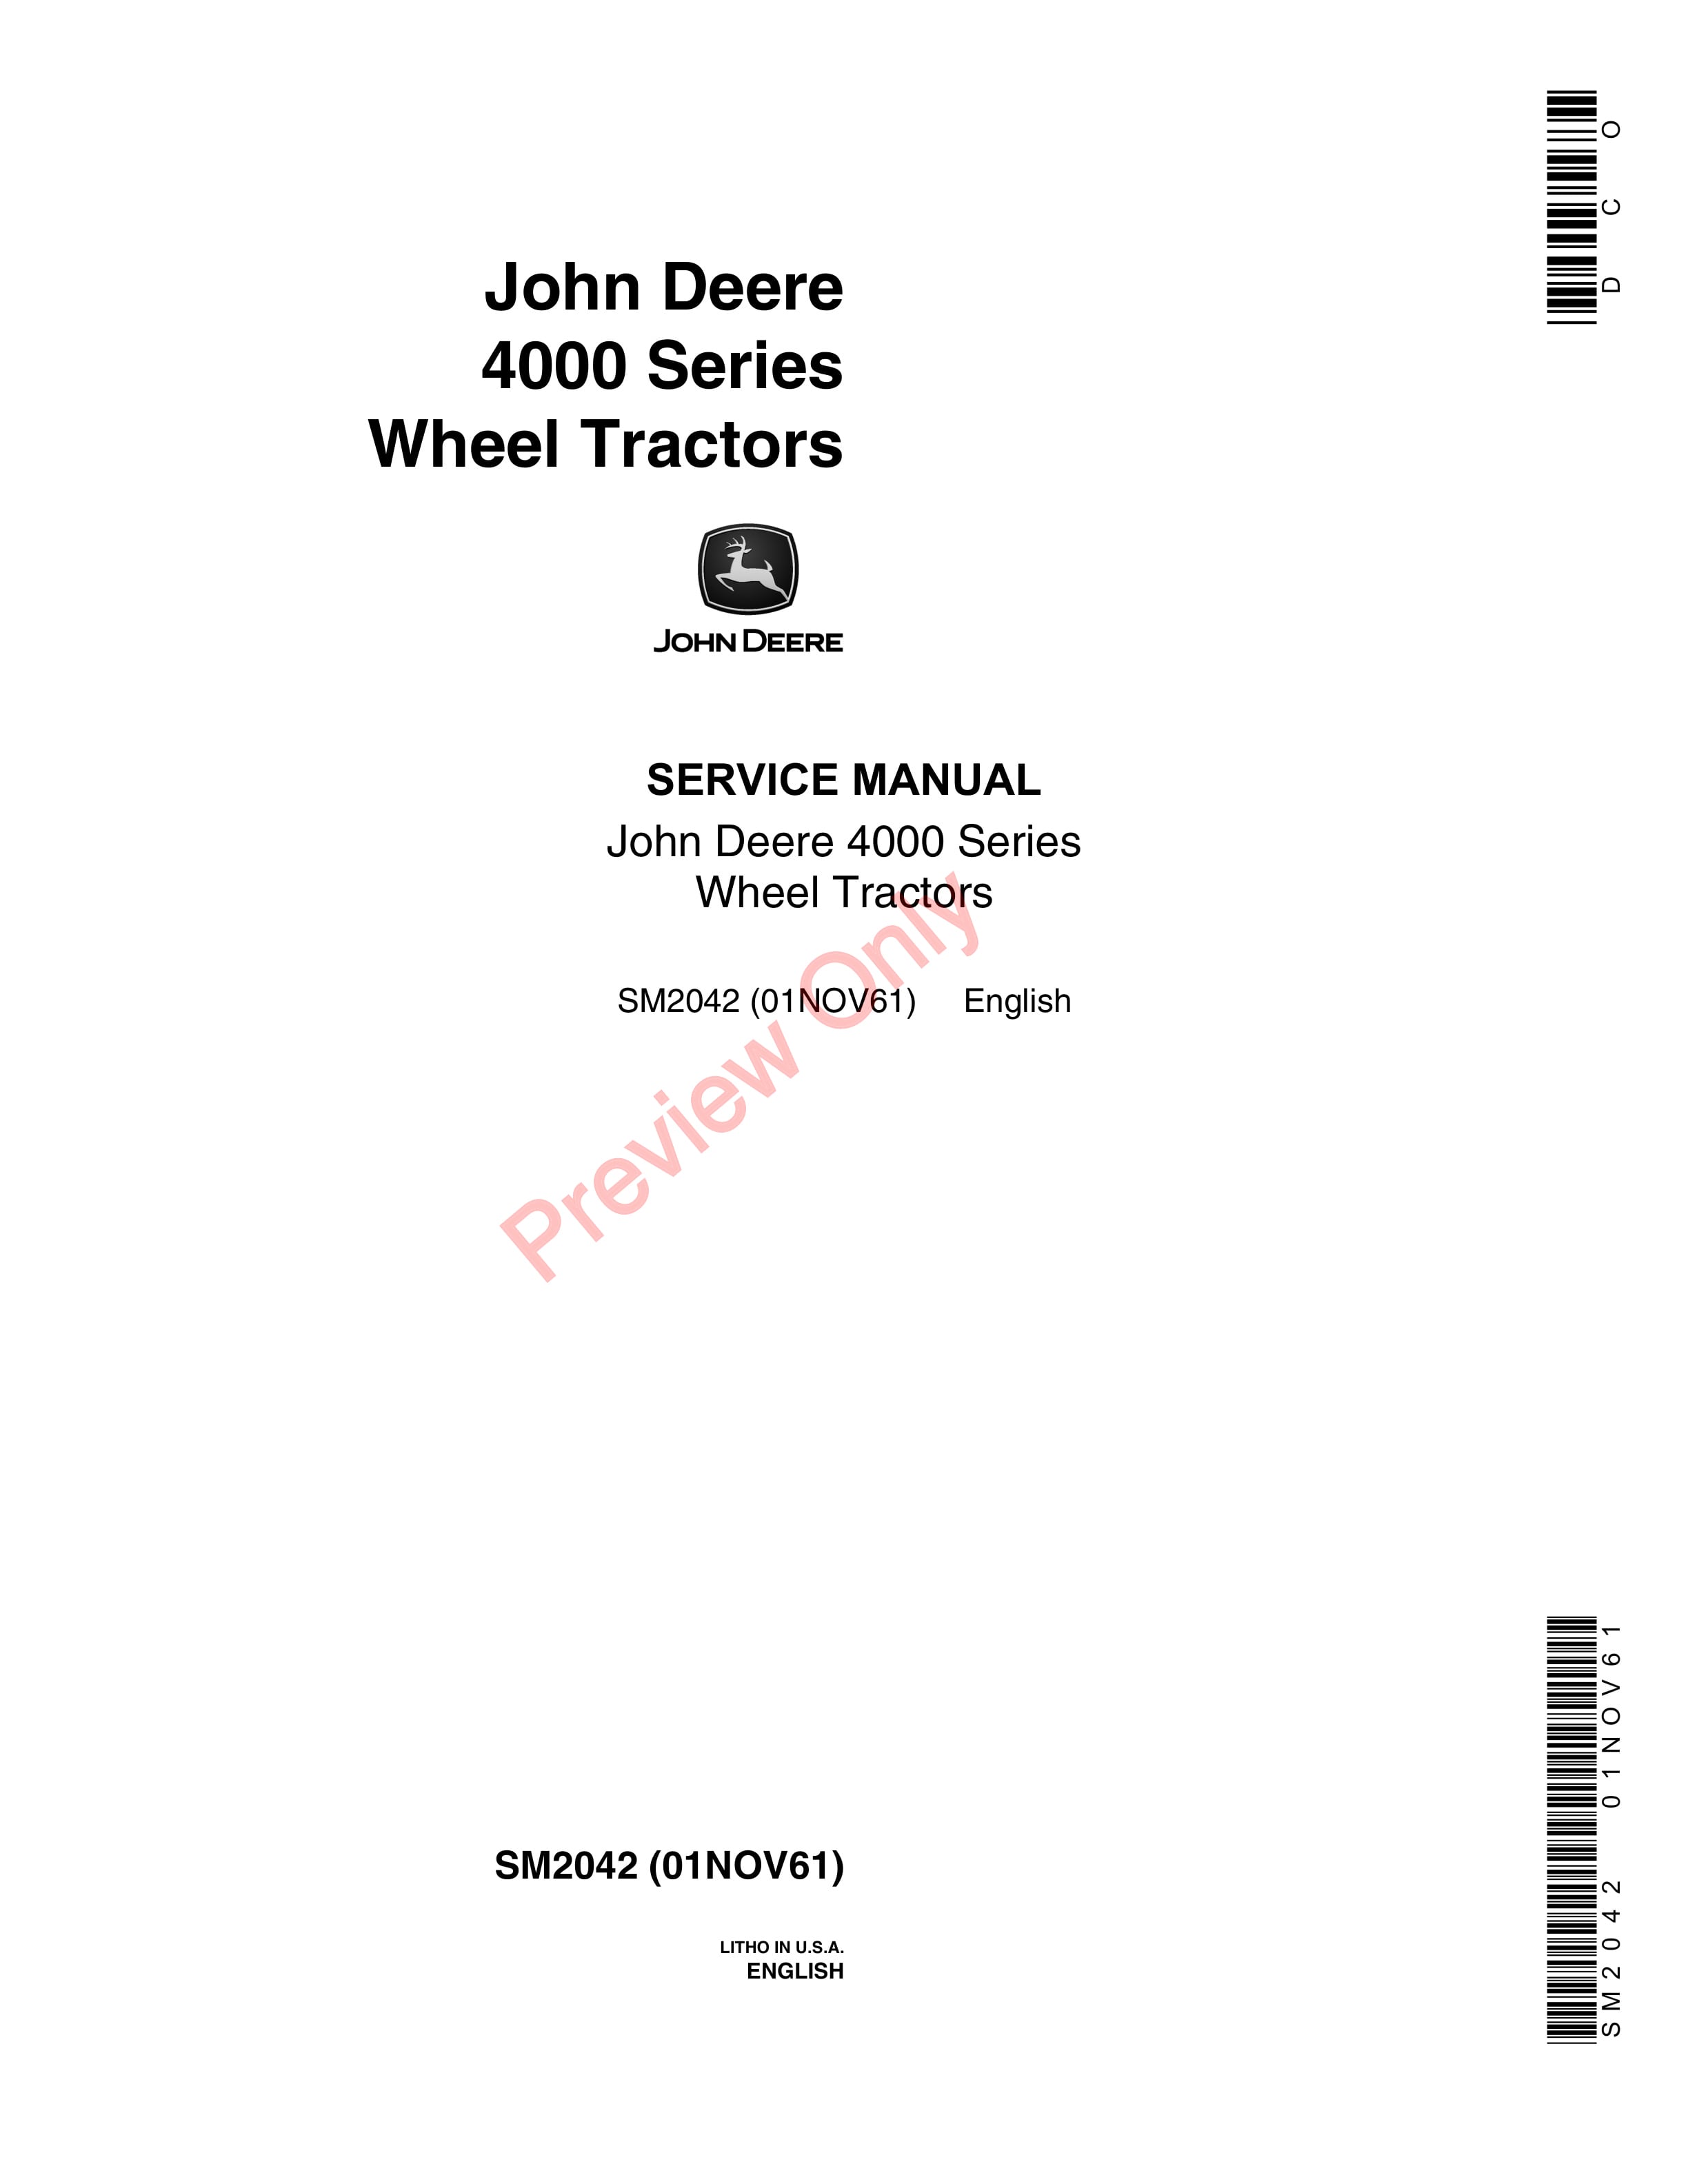 John Deere 4000 Series Wheel Tractors Service Manual SM2042 01NOV61-1